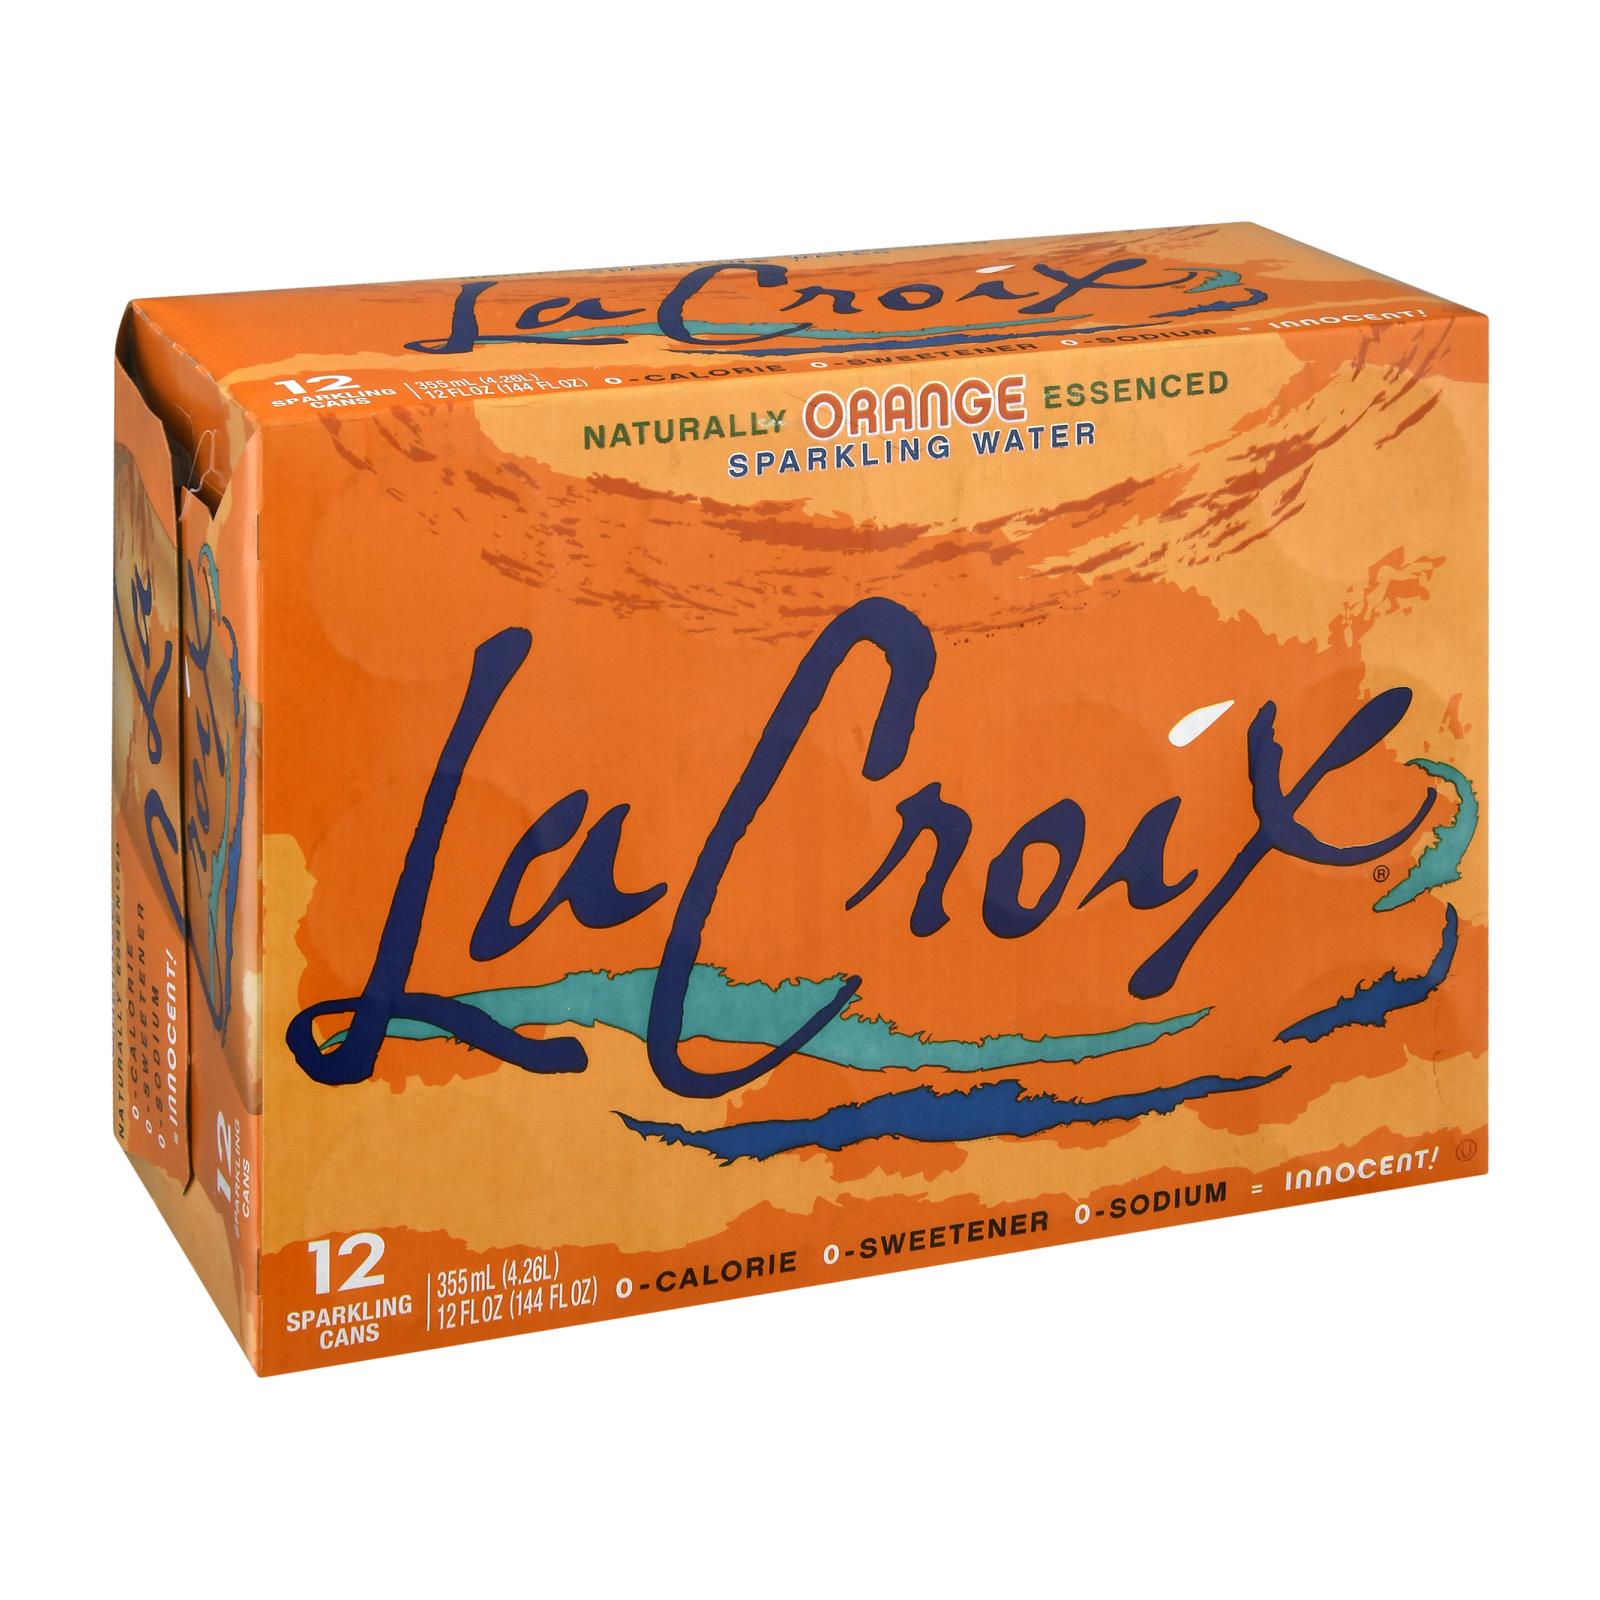 Lacroix Sparkling Water - Orange - Case of 2 - 12/12 fl oz